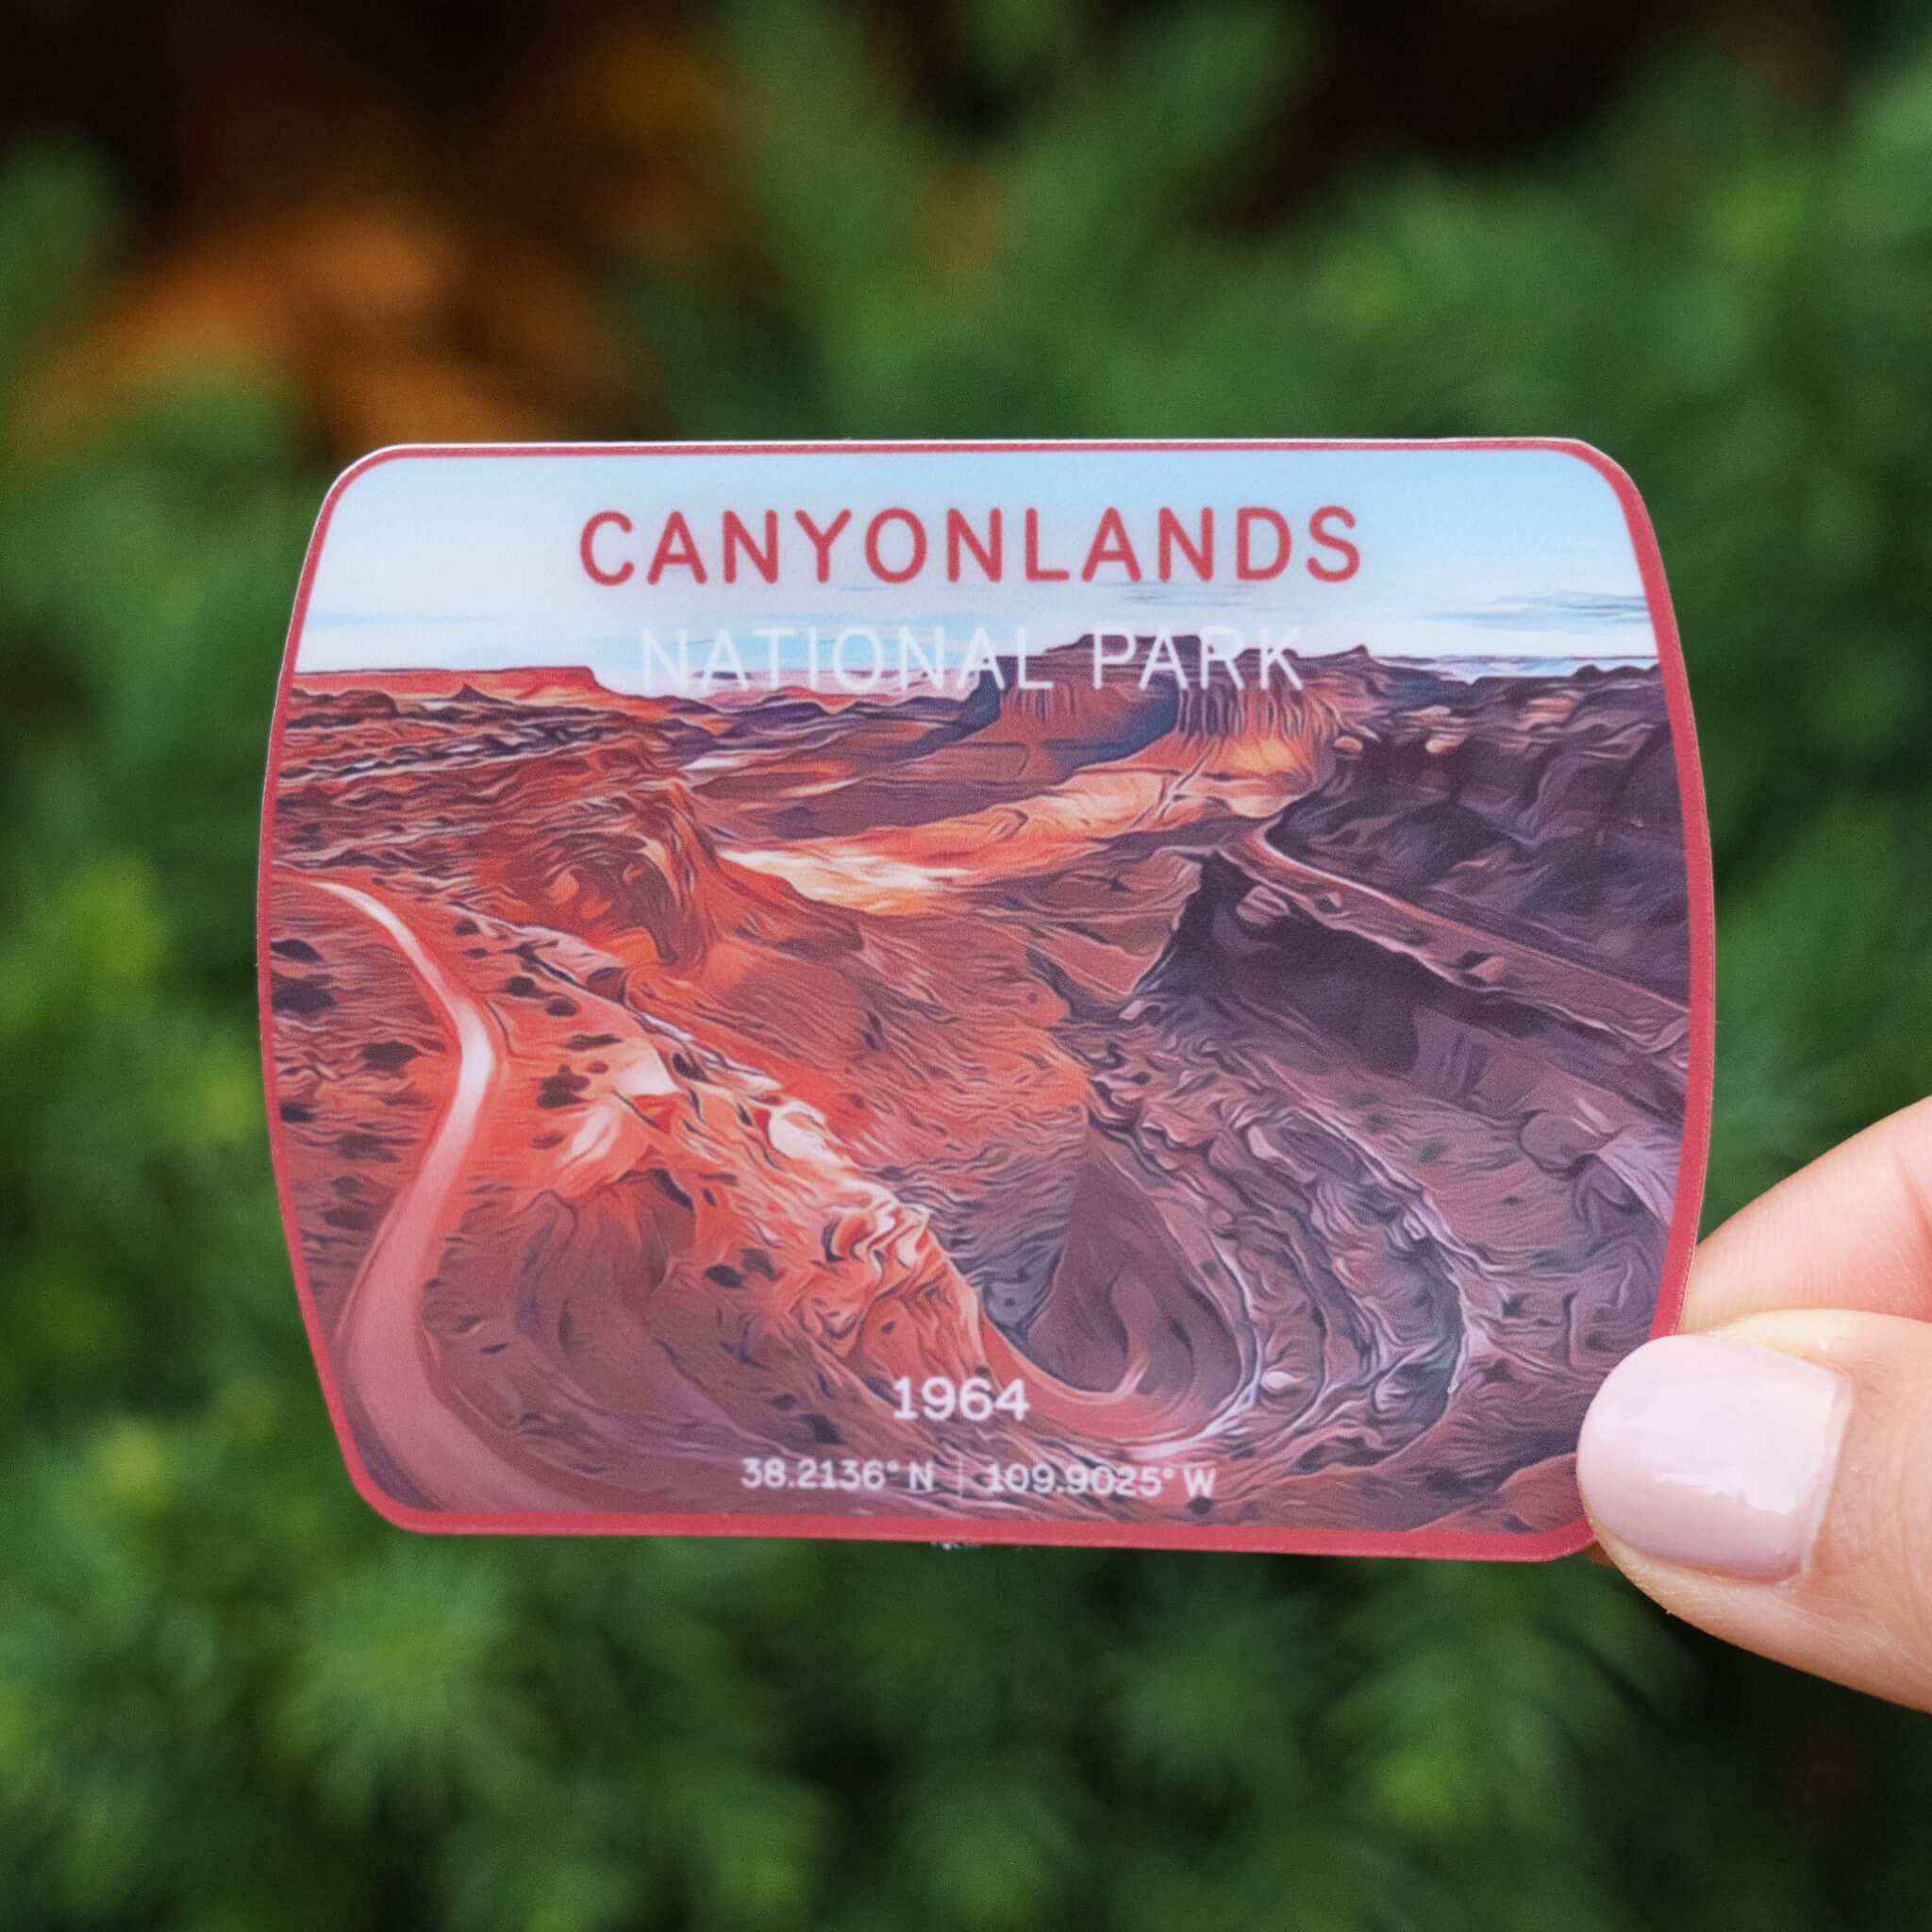 Canyonlands National Park Sticker